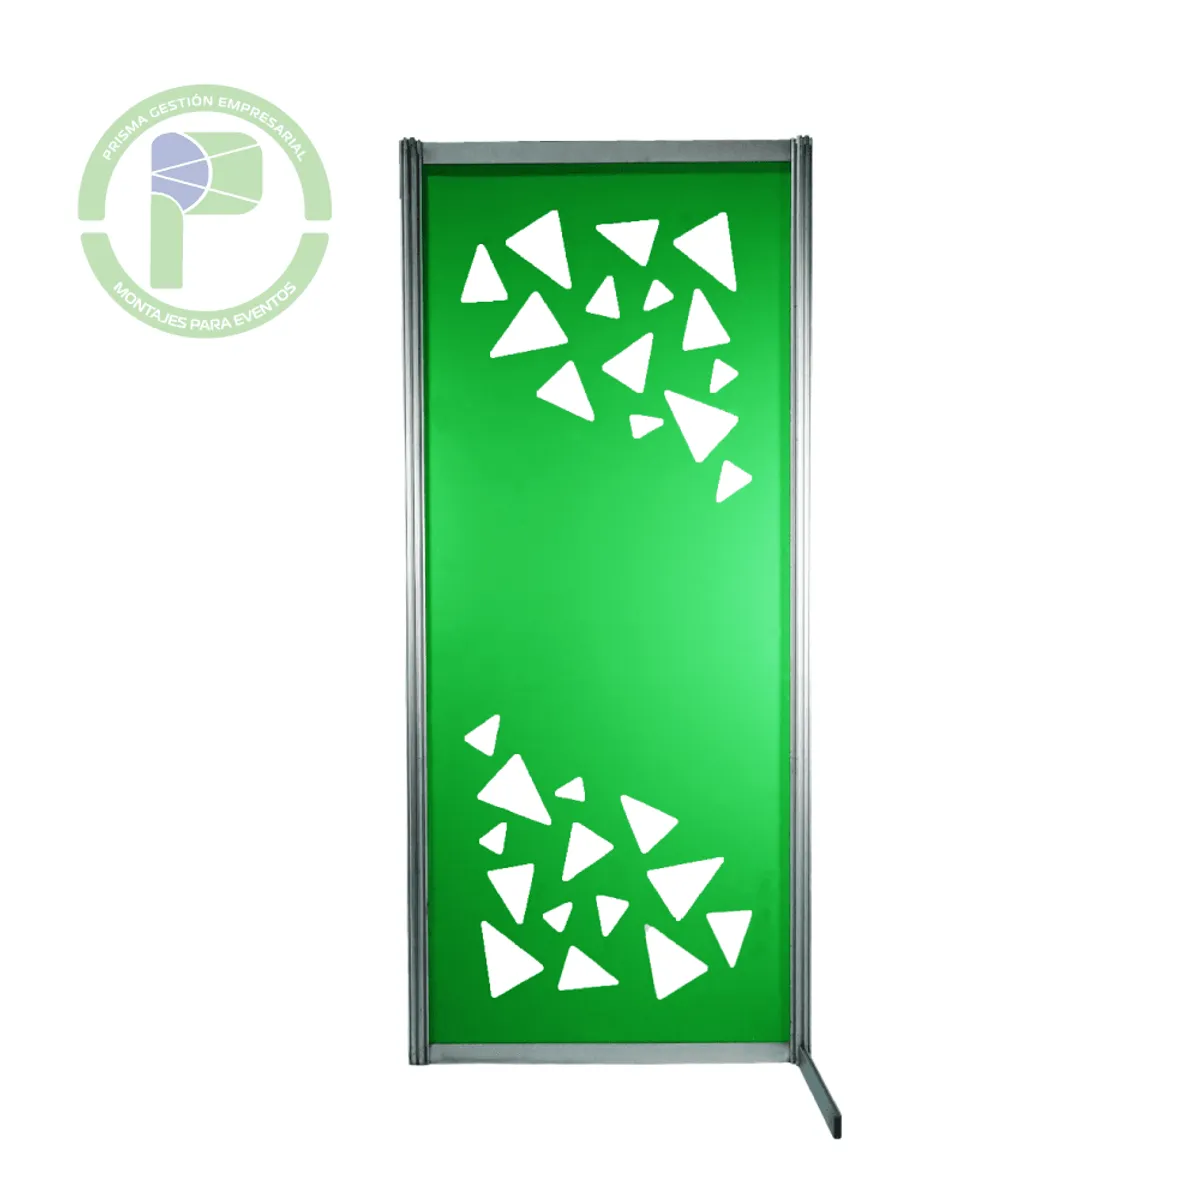 Panel troquelado triangular verde